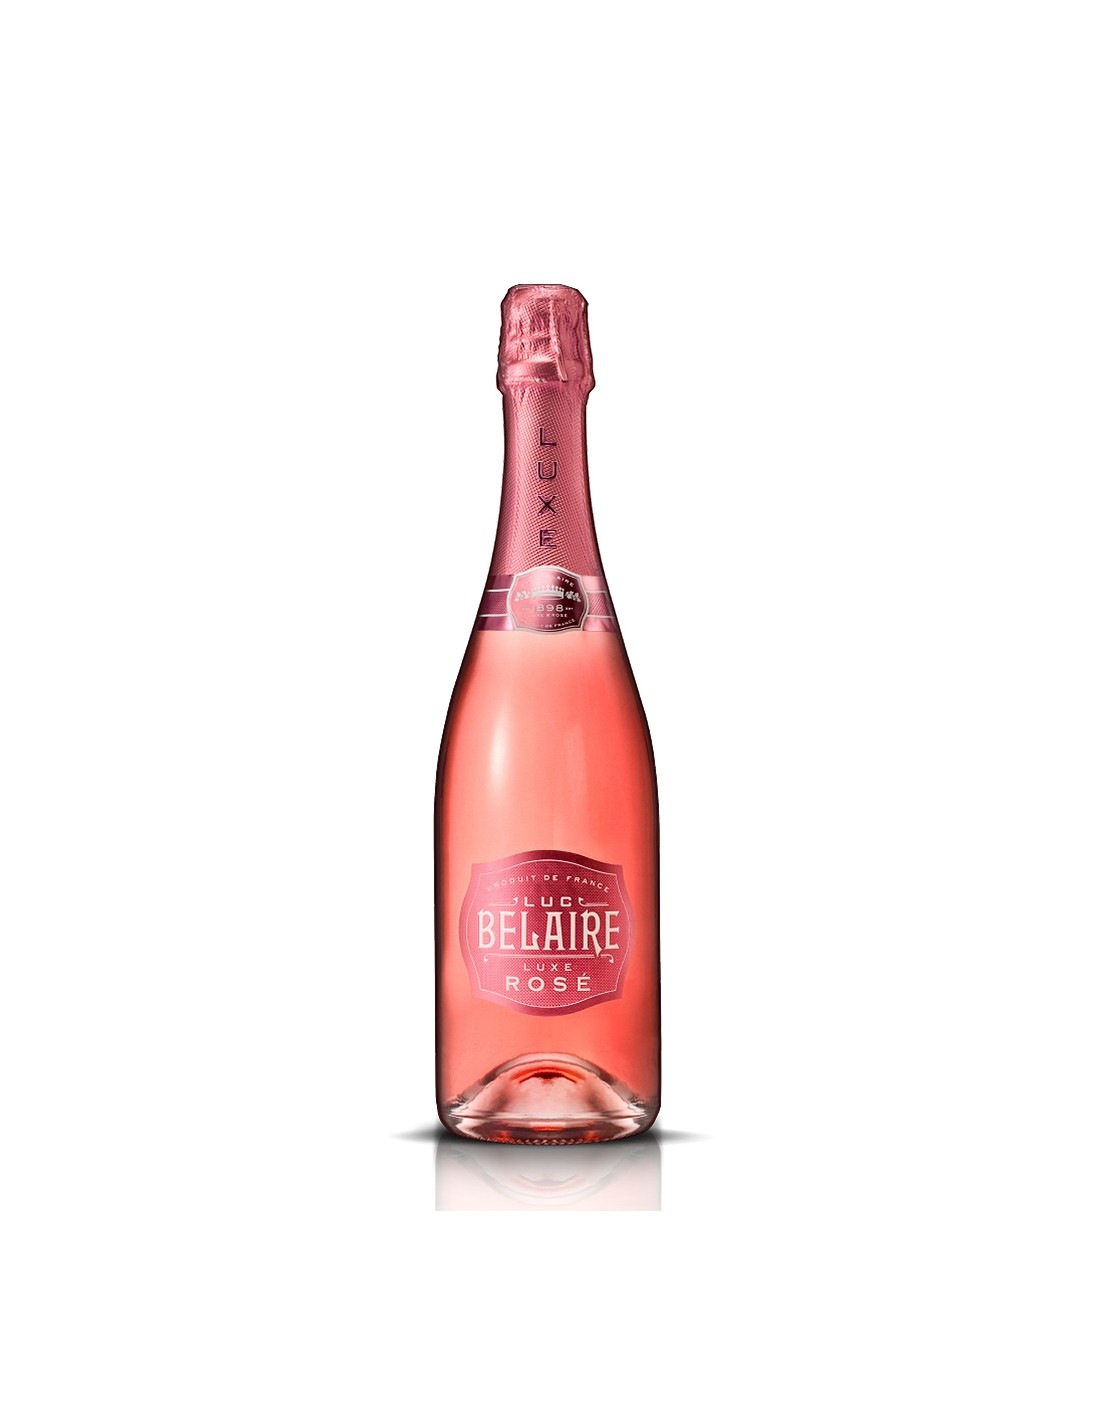 Vin spumant Luc Belaire Luxe Rose, 12.5% alc., 0.75L, Franta alcooldiscount.ro